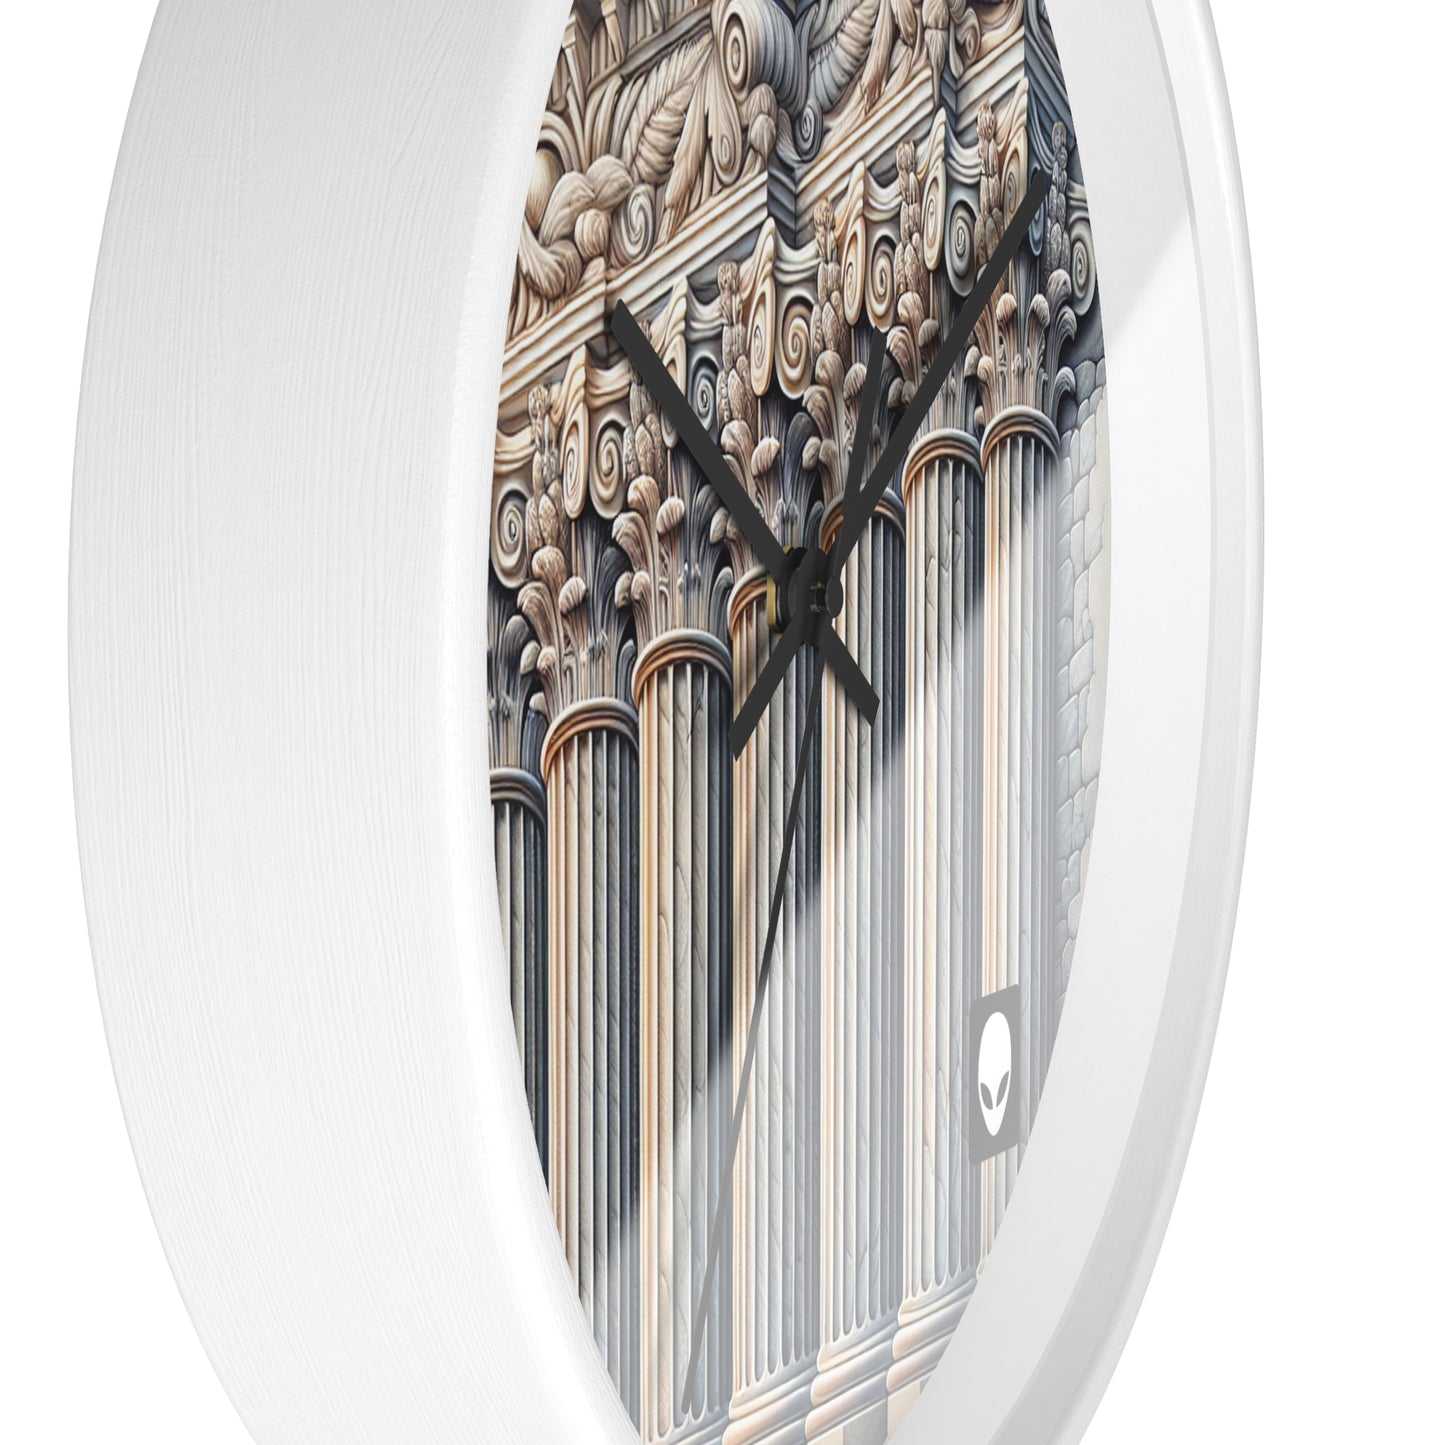 "3D Wall Columns: An Architectural Artpiece" - The Alien Wall Clock Trompe-l'oeil Style